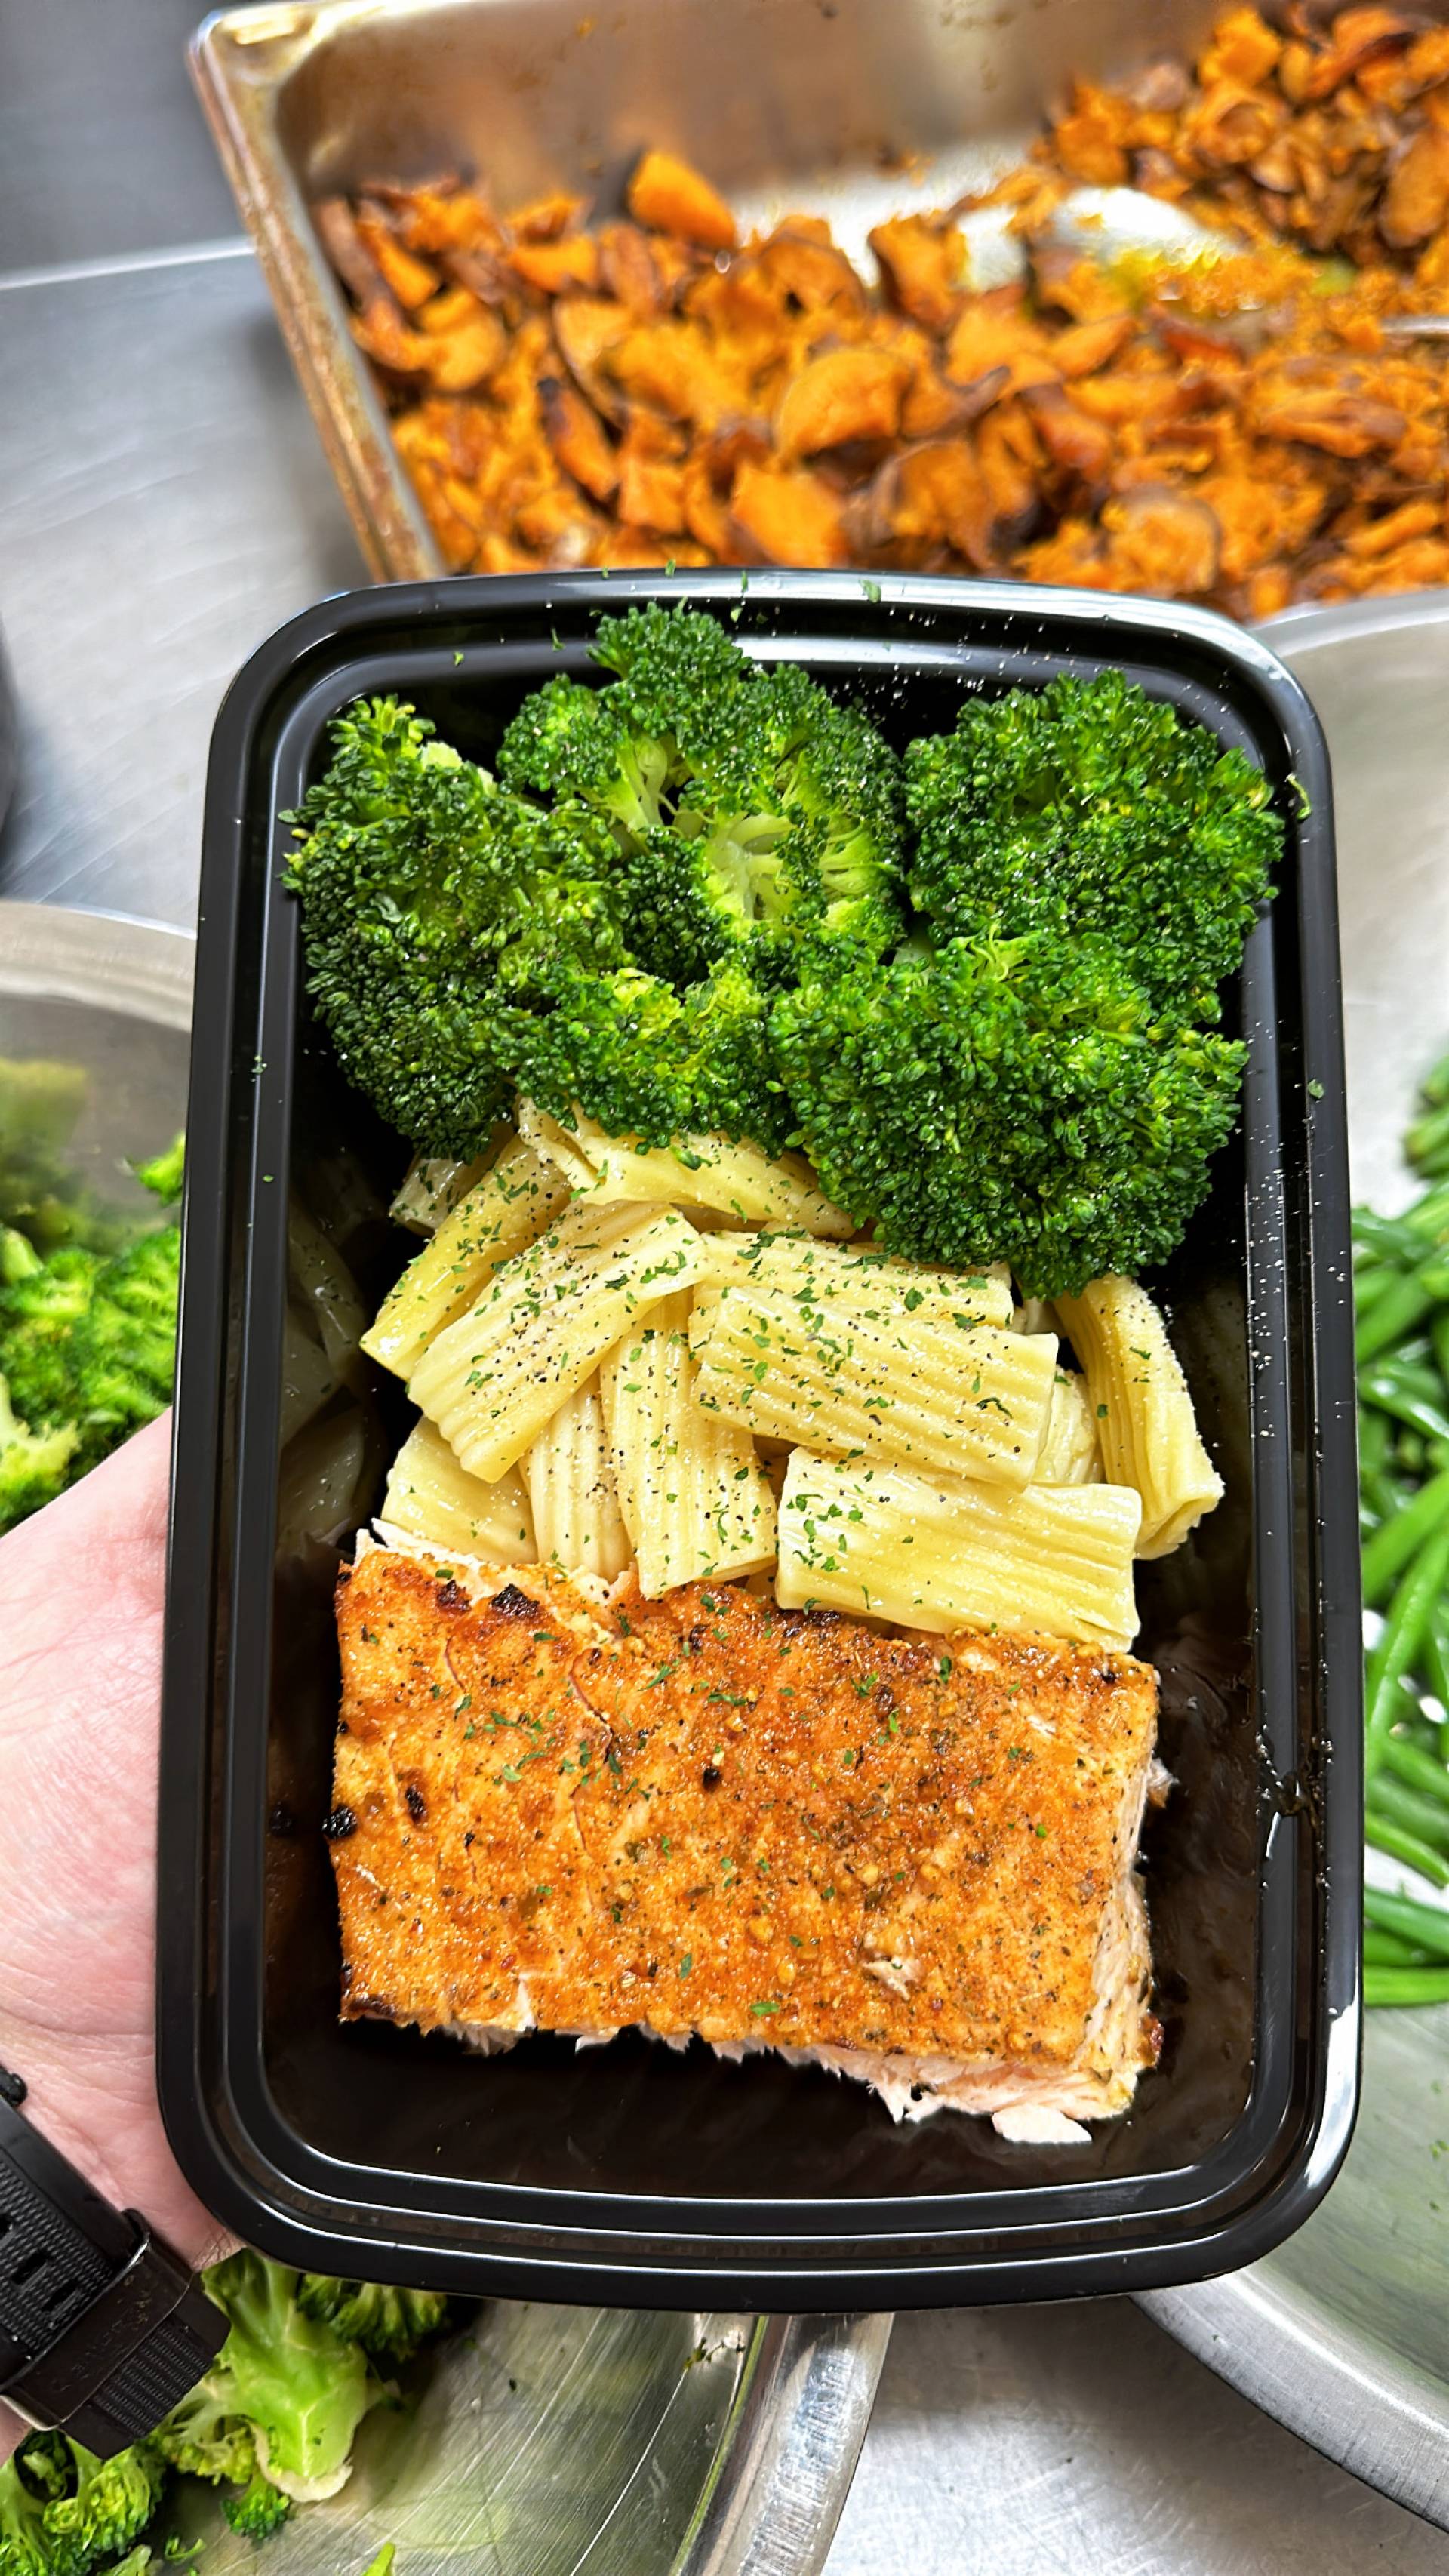 Salmon + Pasta + Broccoli